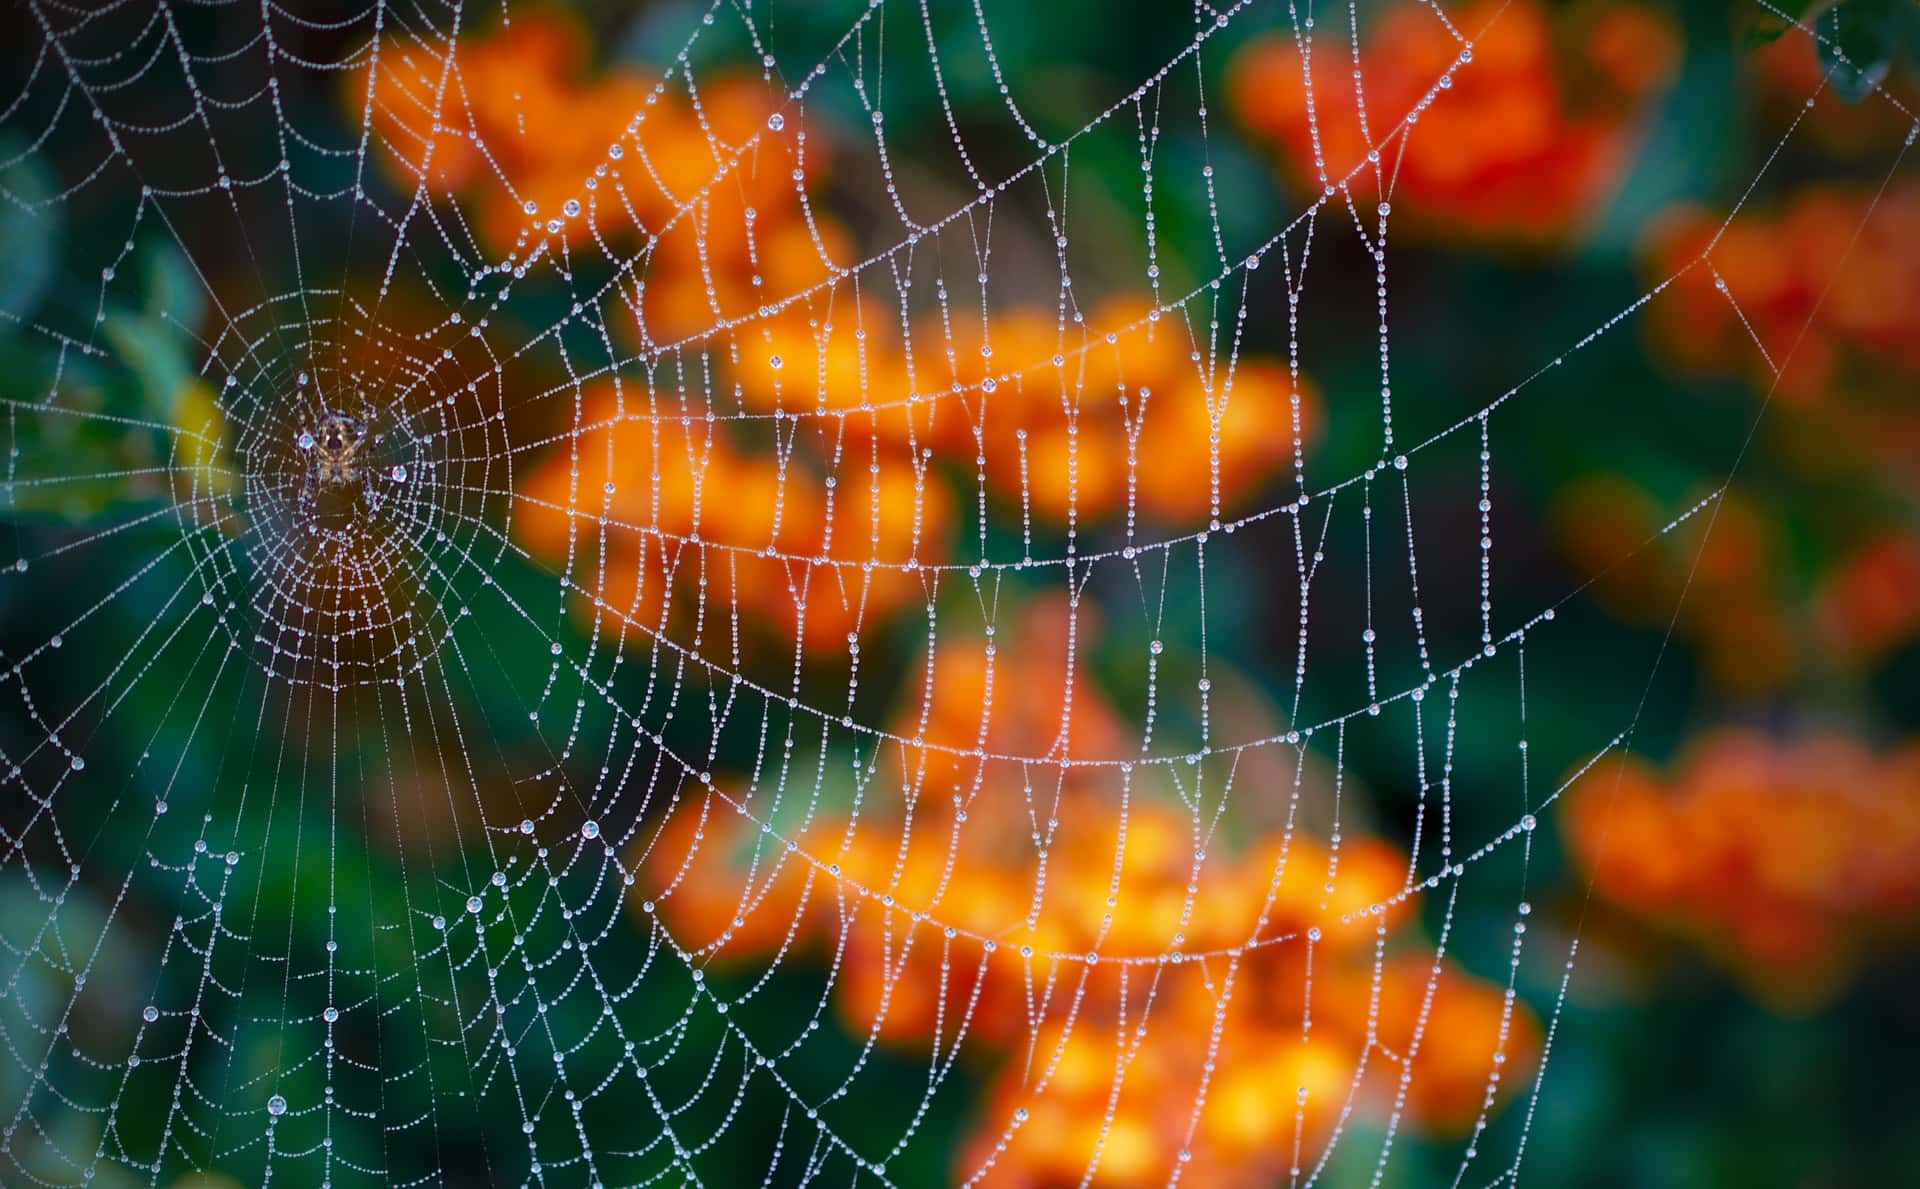 spider web laden with dew